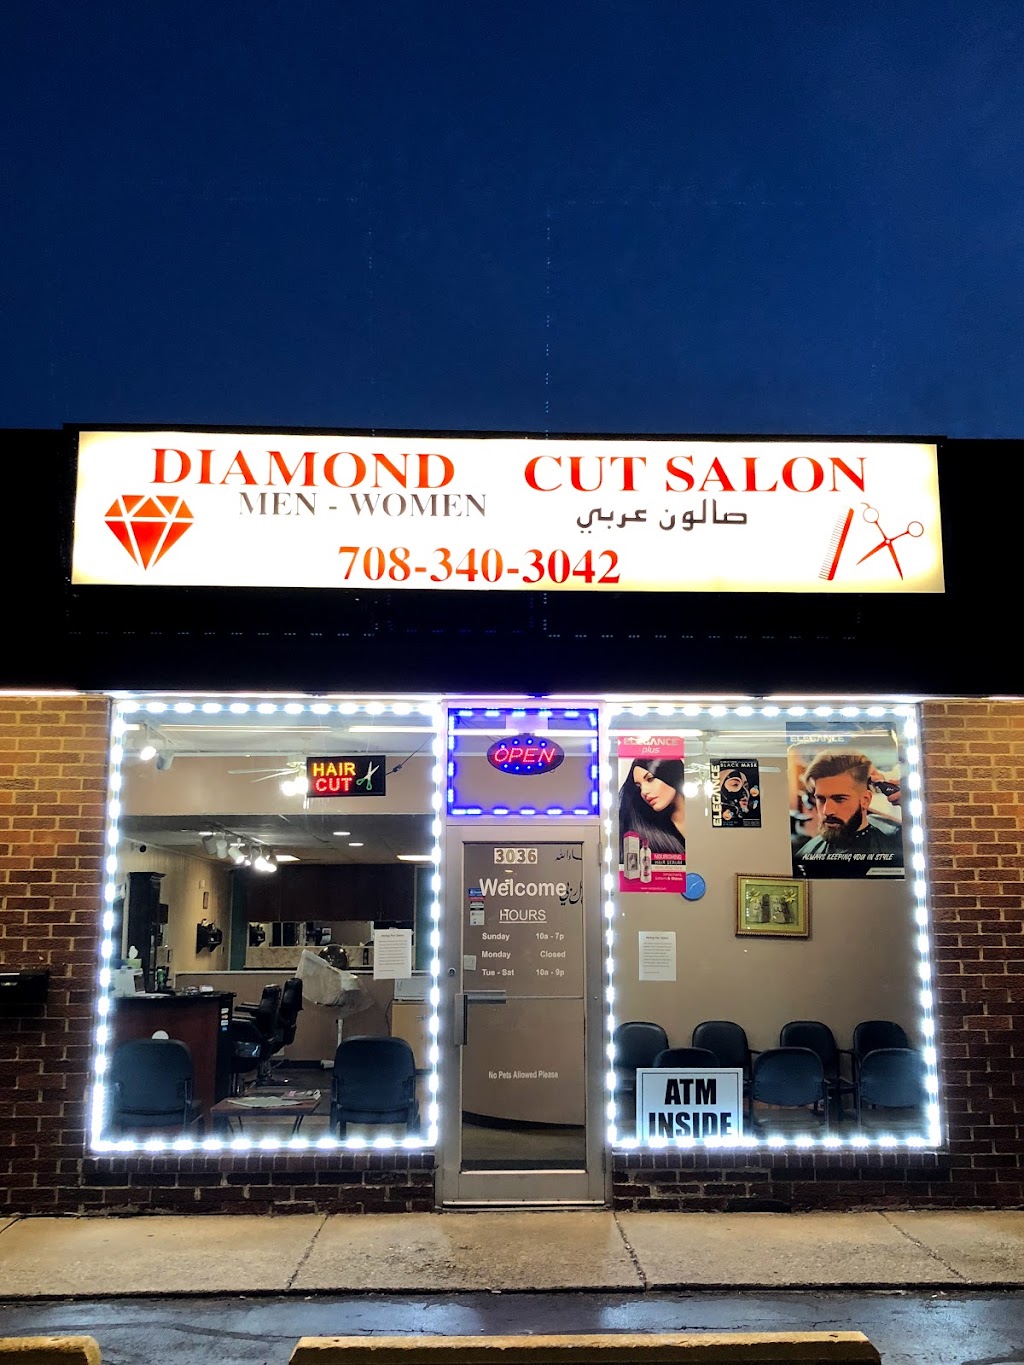 Diamond Cut Salon (ASHRAF) | 3036 45th St, Highland, IN 46322 | Phone: (219) 333-9109